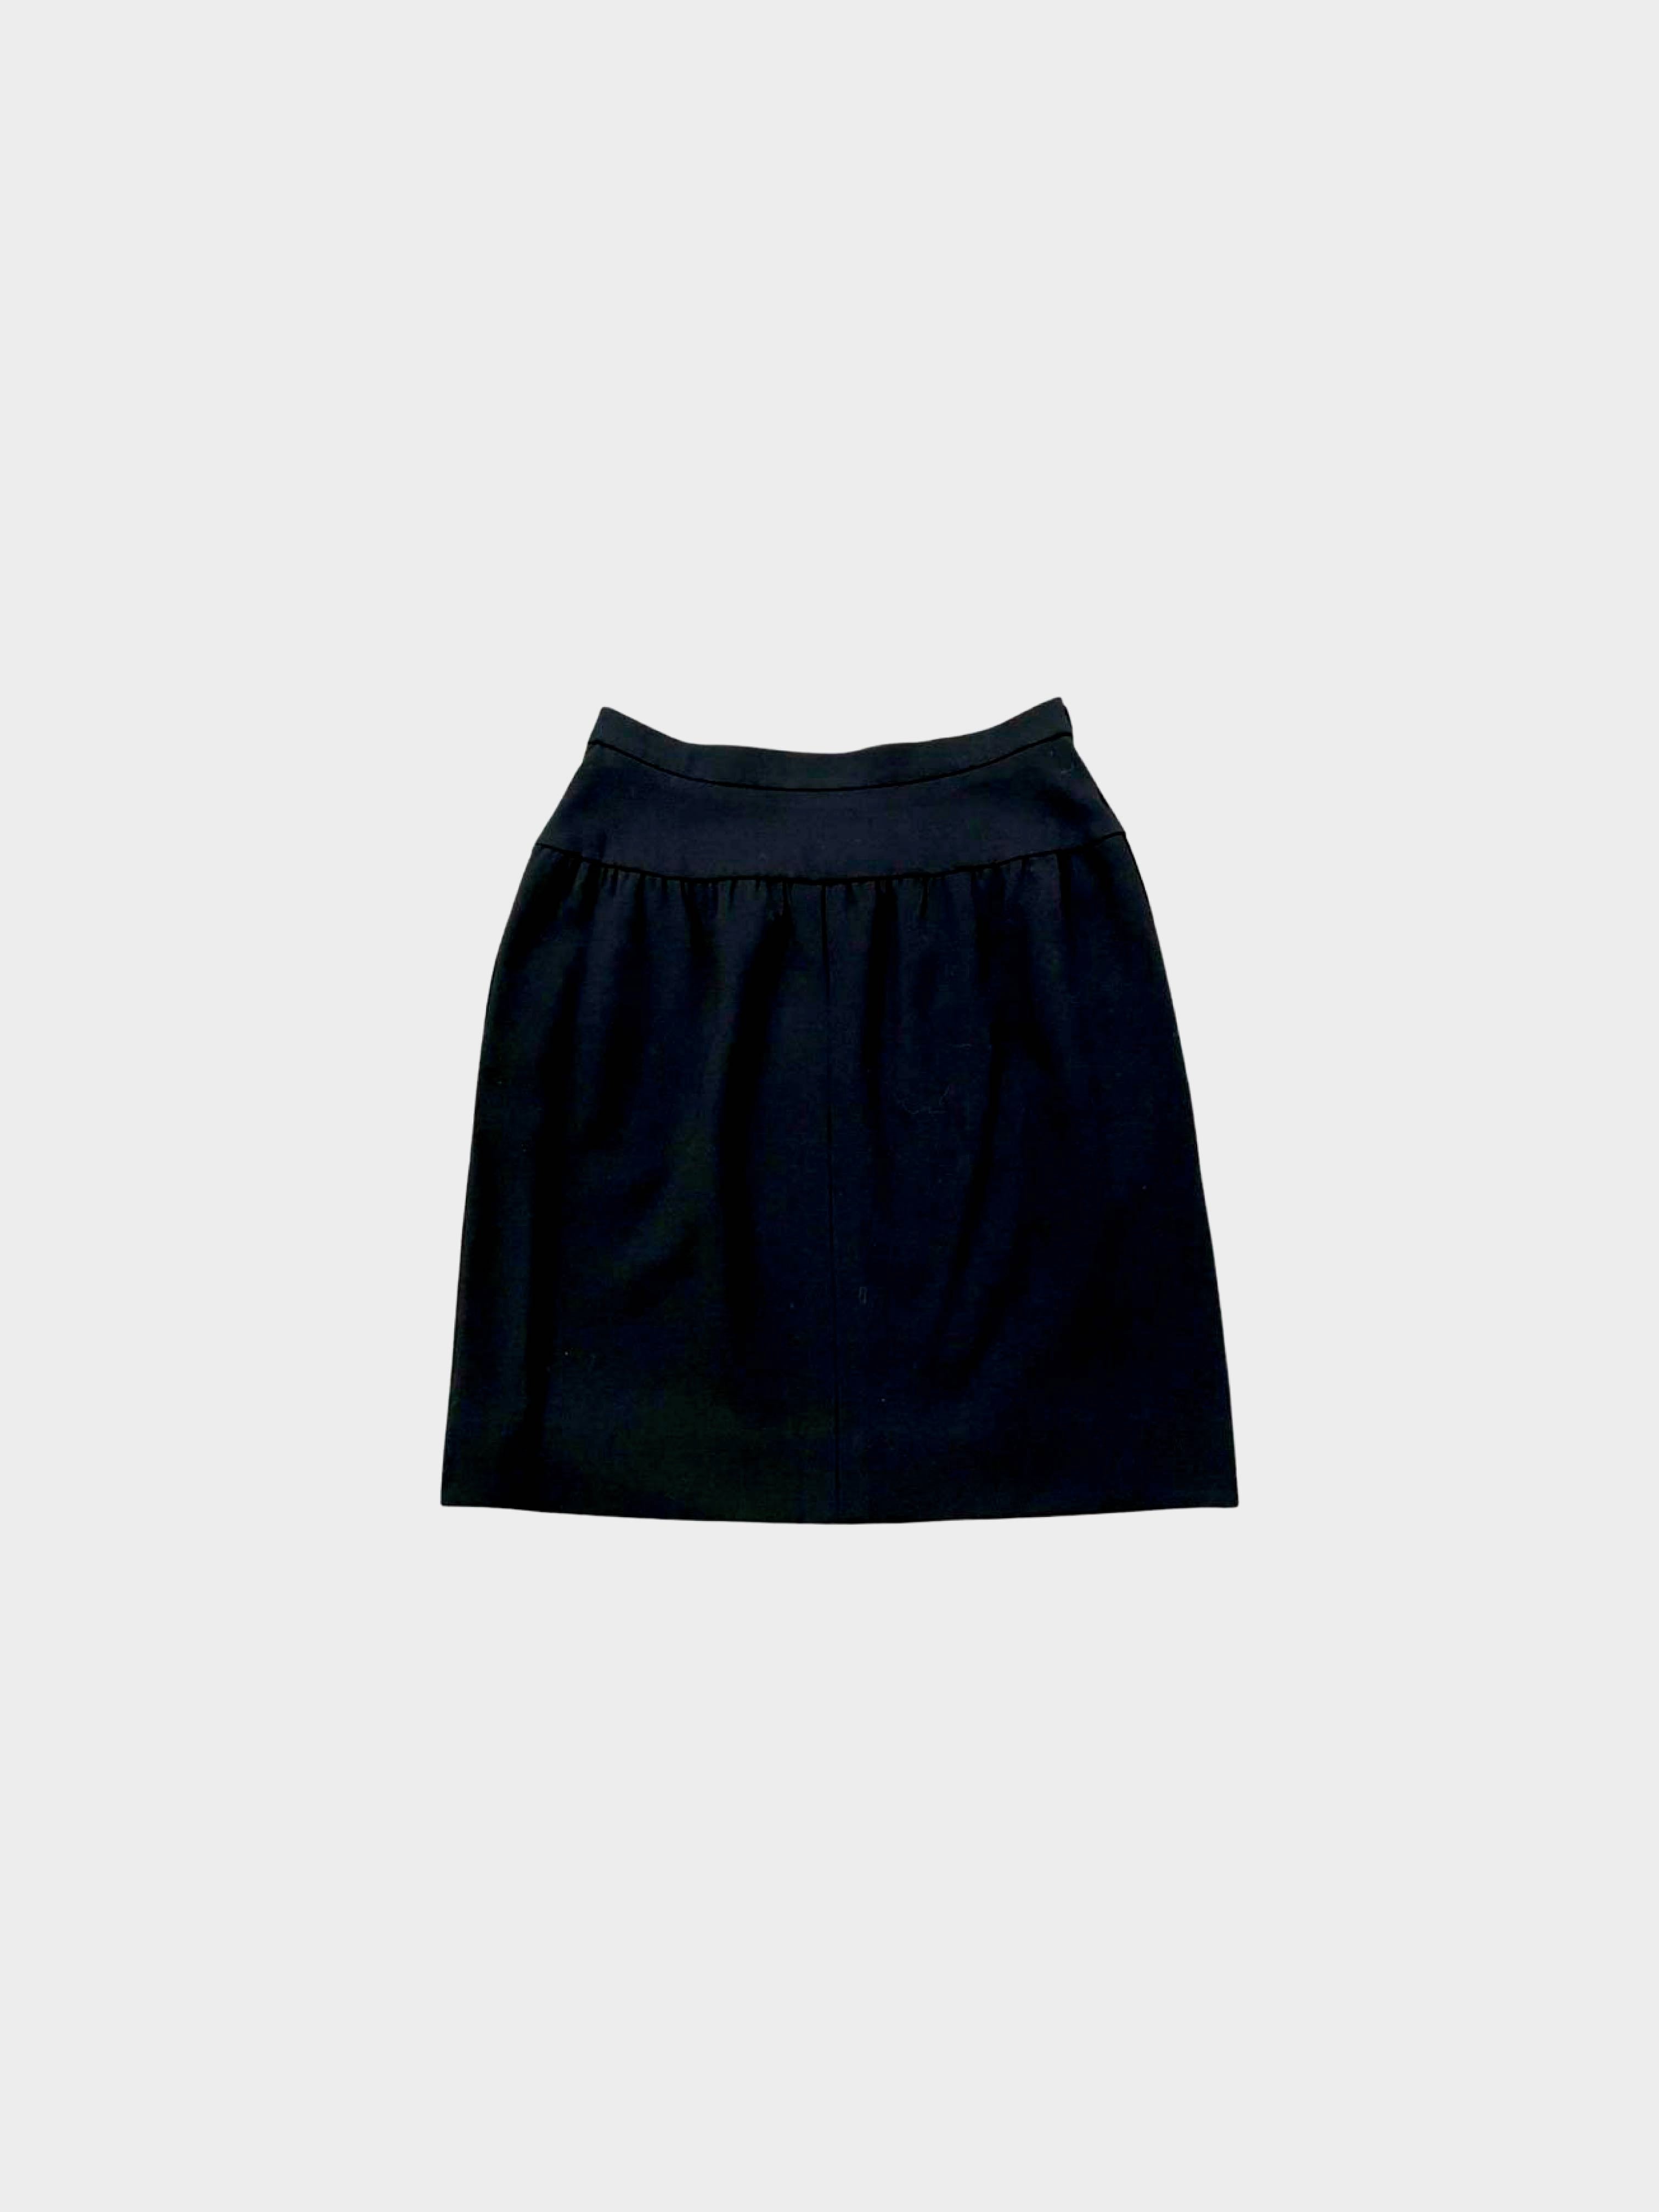 Chanel 1990s Black Cotton Pencil Skirt